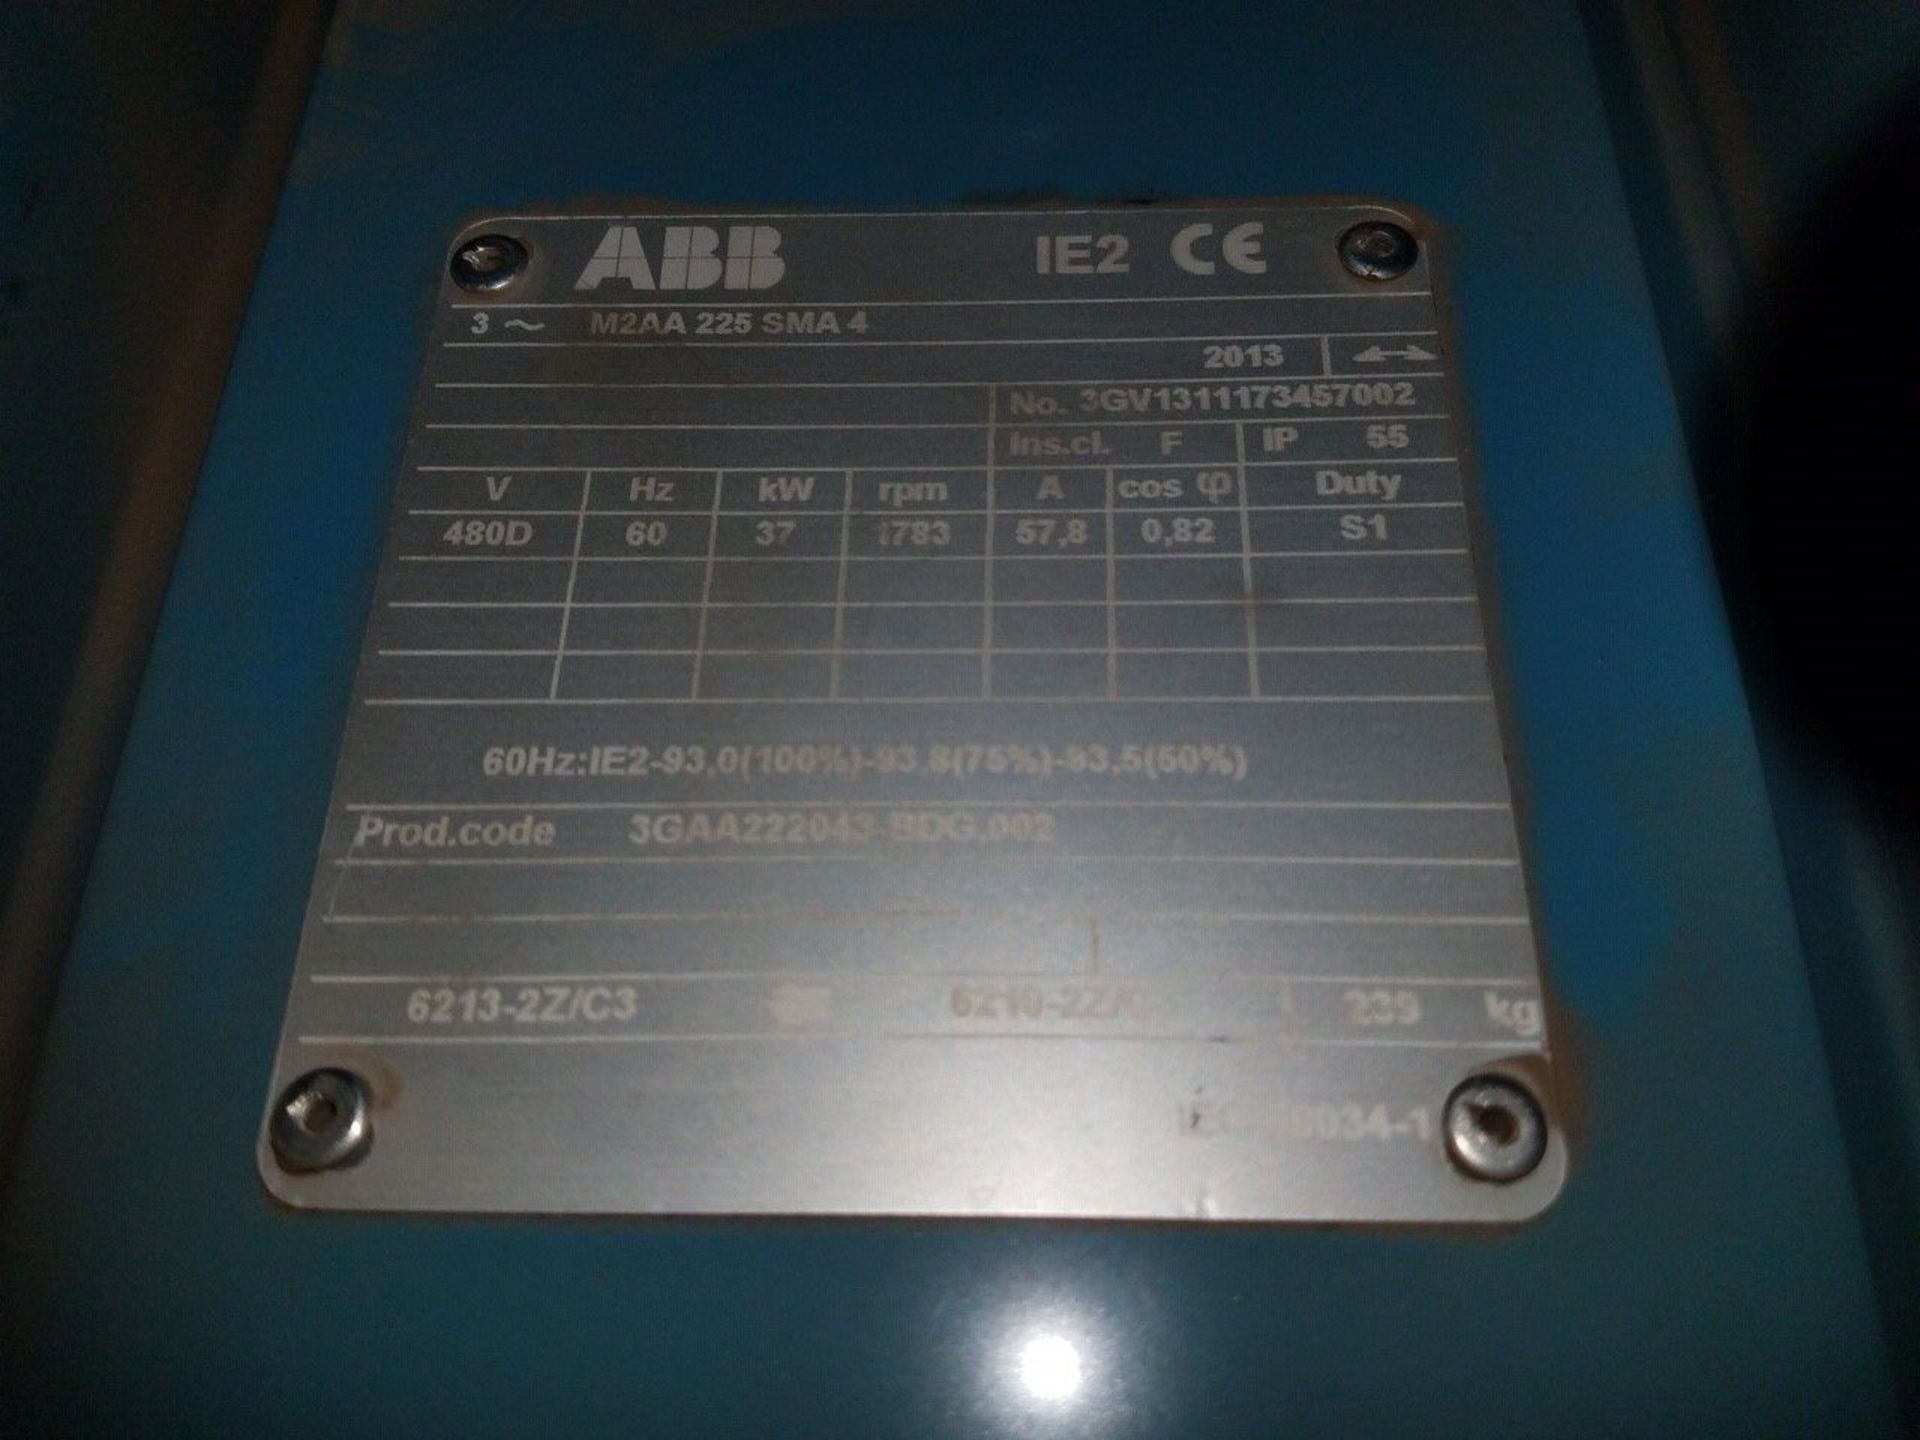 IMABE IBERICA MODEL MP100 (CH-1400/73) TWO RAM NON-FERROUS HYDRAULIC BALER; S/N 12162, 137 TON - Image 29 of 29